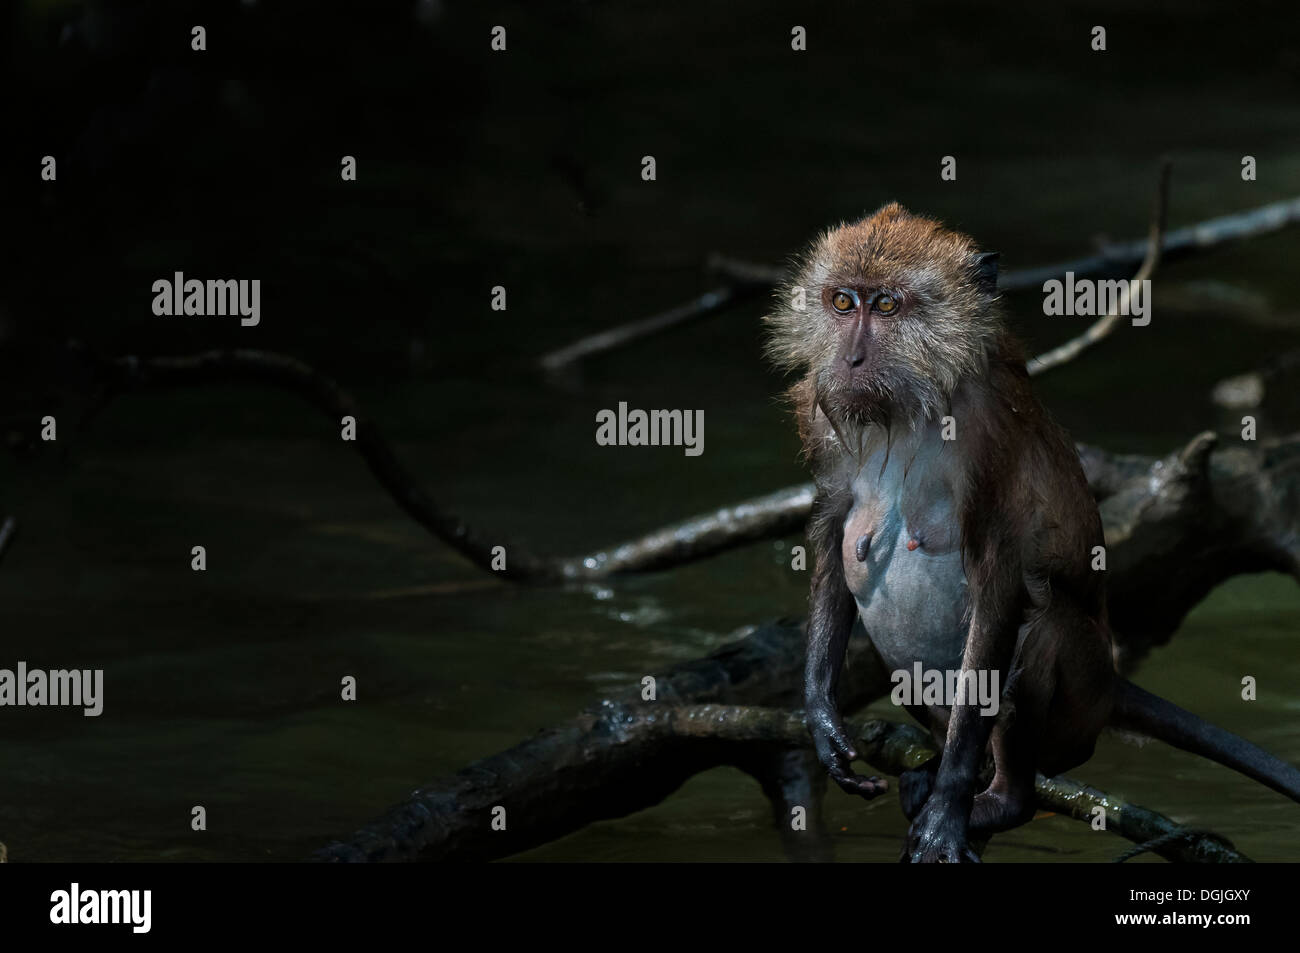 A Macaque monkey. Stock Photo